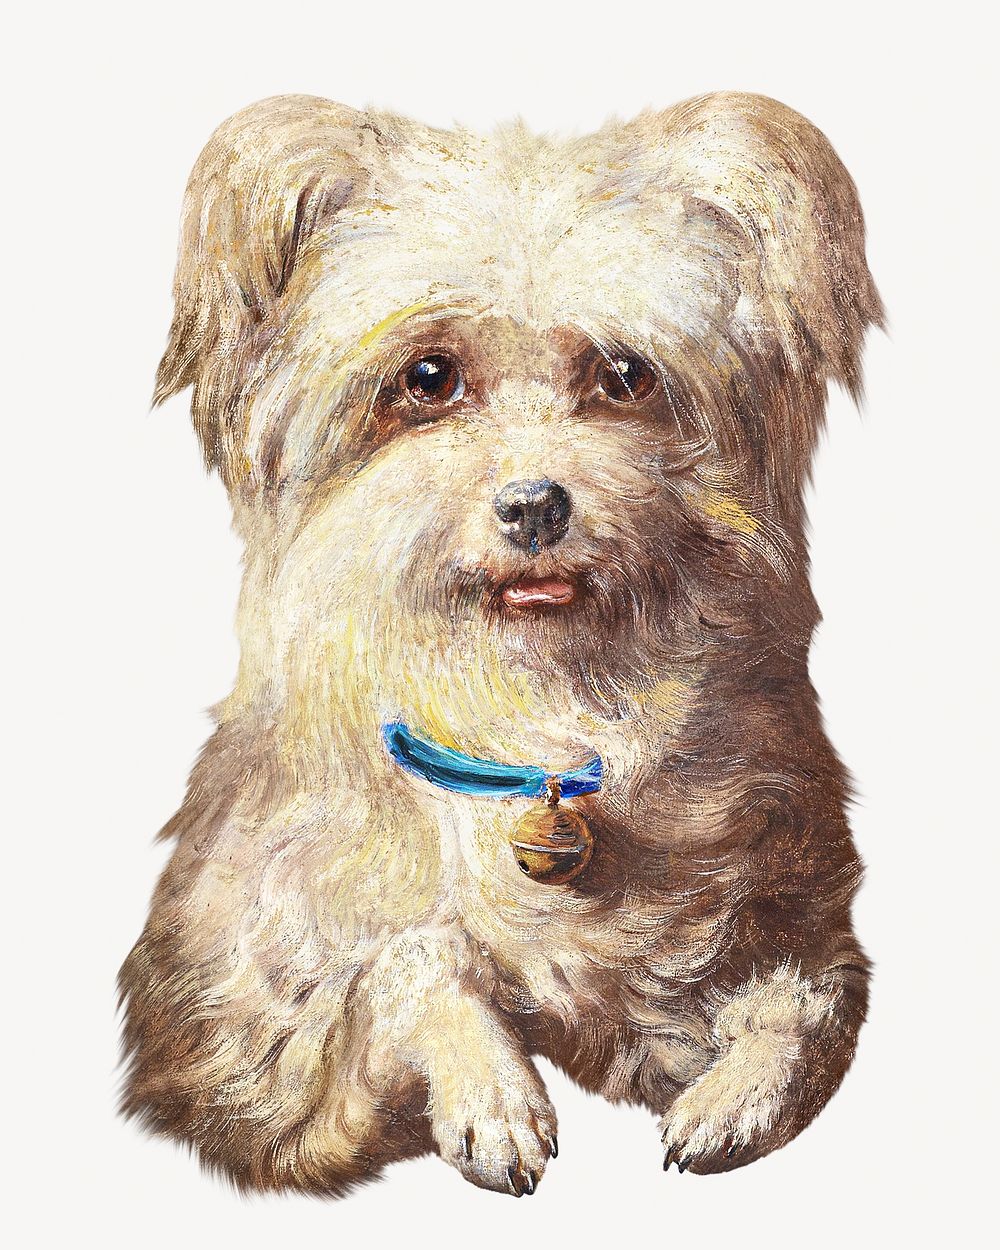 Griffon Bruxelloi dog painting art. Remixed by rawpixel. 